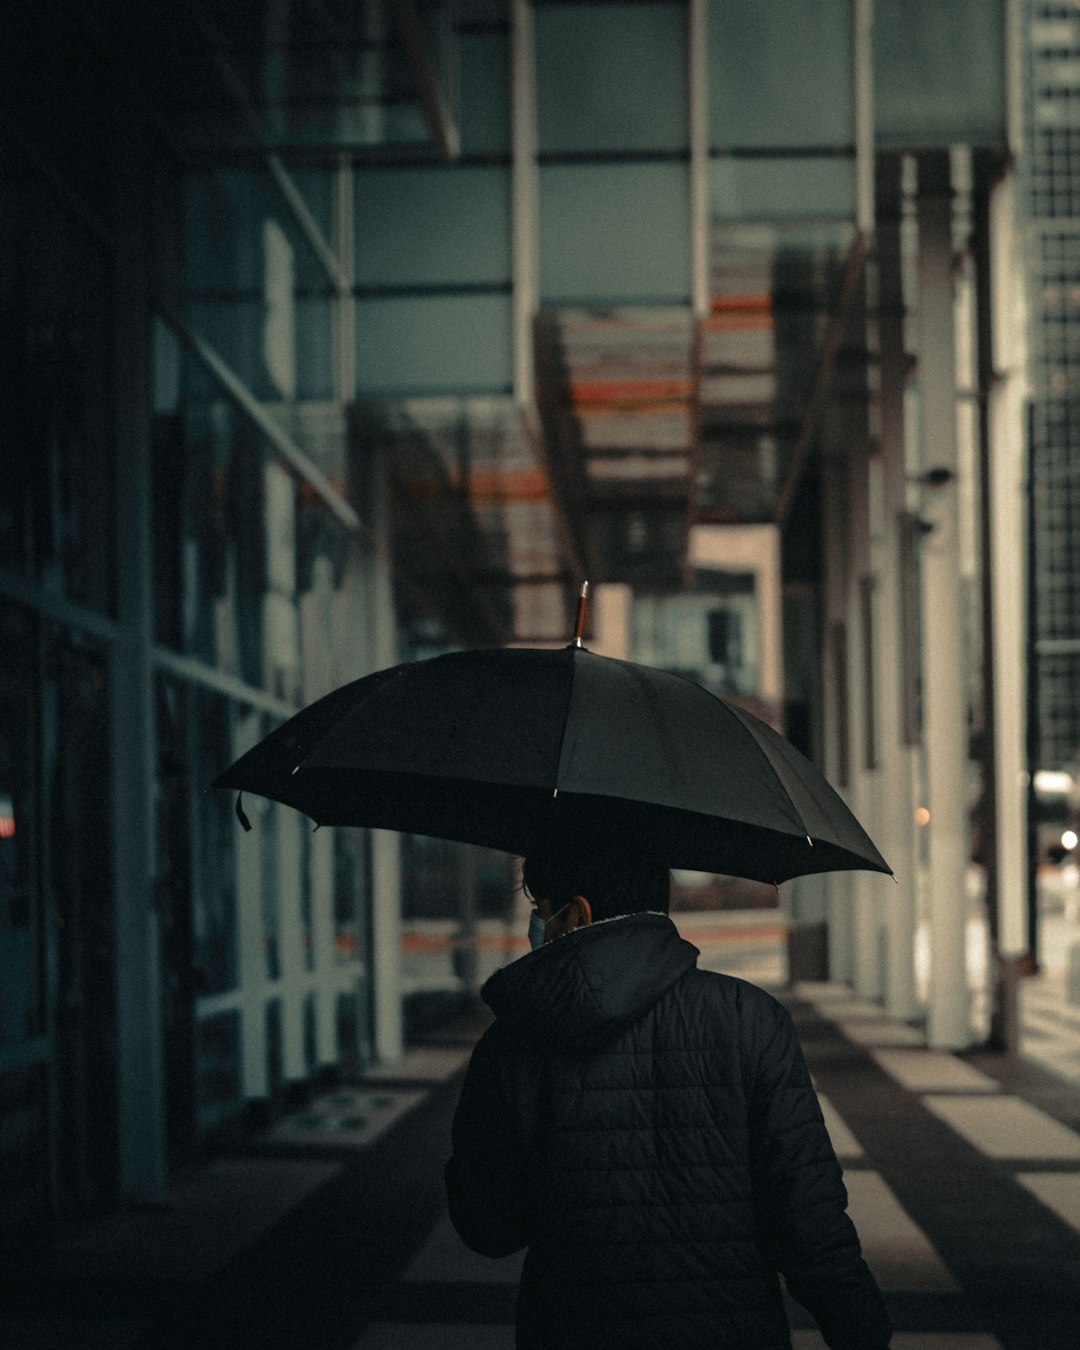 person in black coat holding umbrella walking on sidewalk during night time